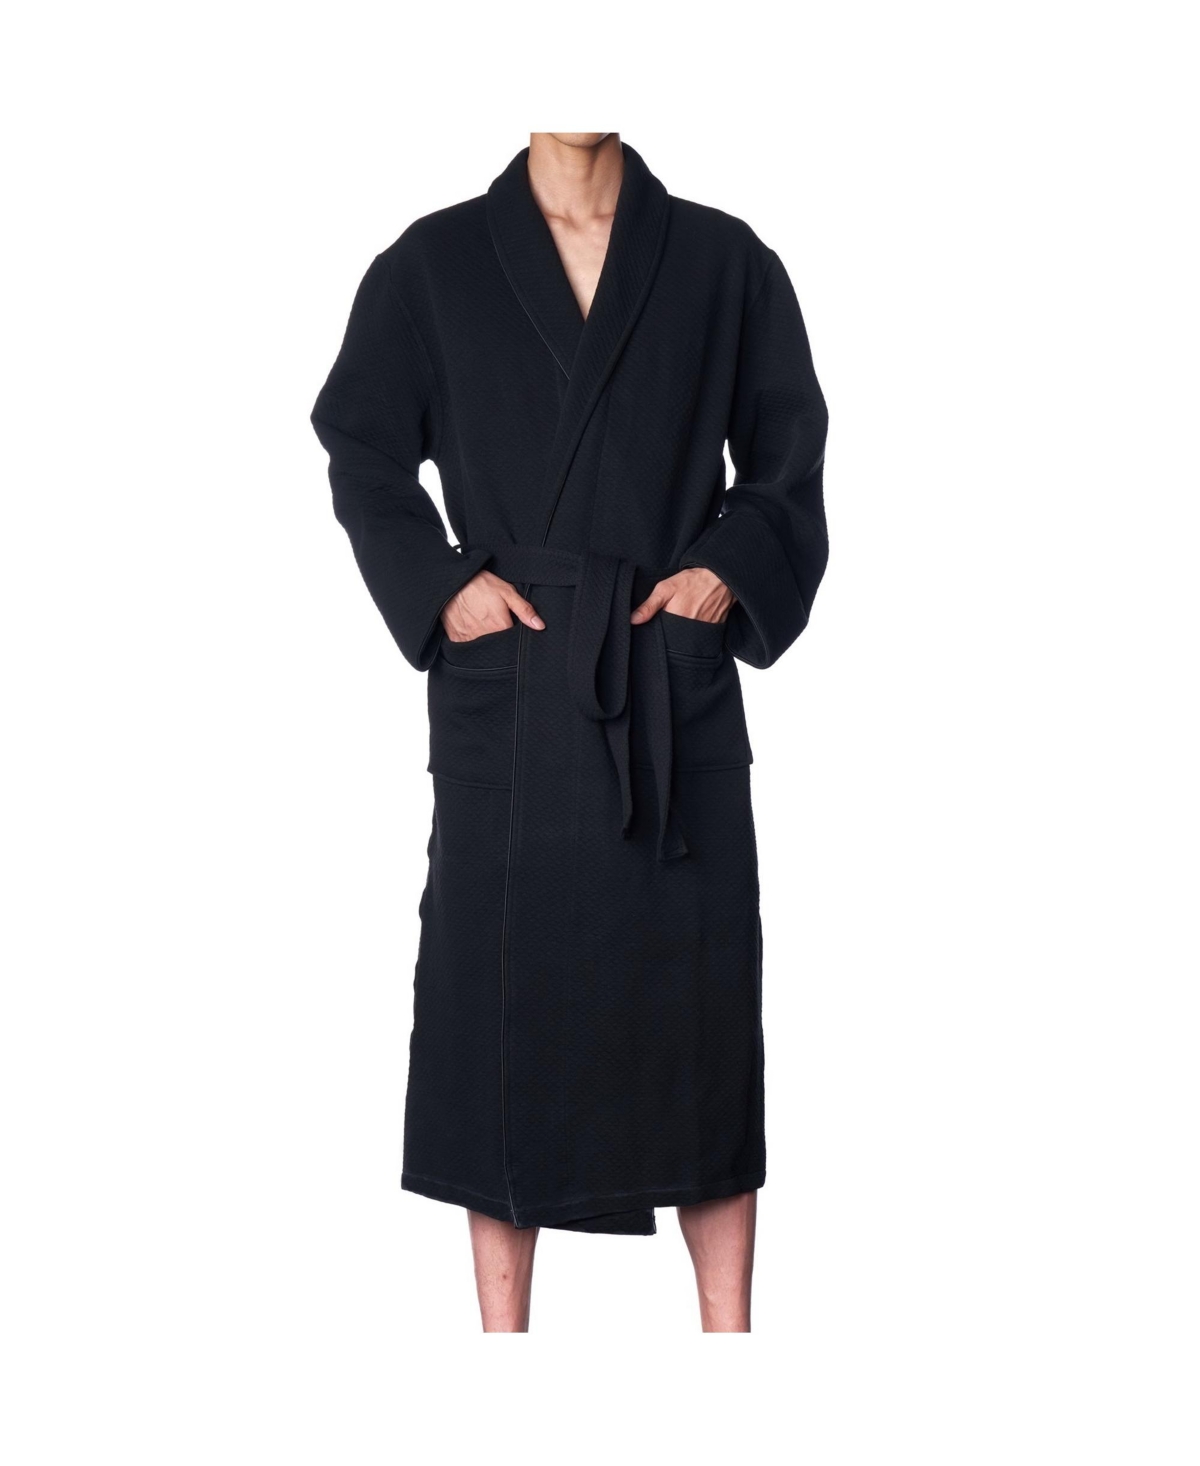 Men's Cotton Blend Shawl Robe Lightweight Kimono Knit Spa Bathrobe - Black